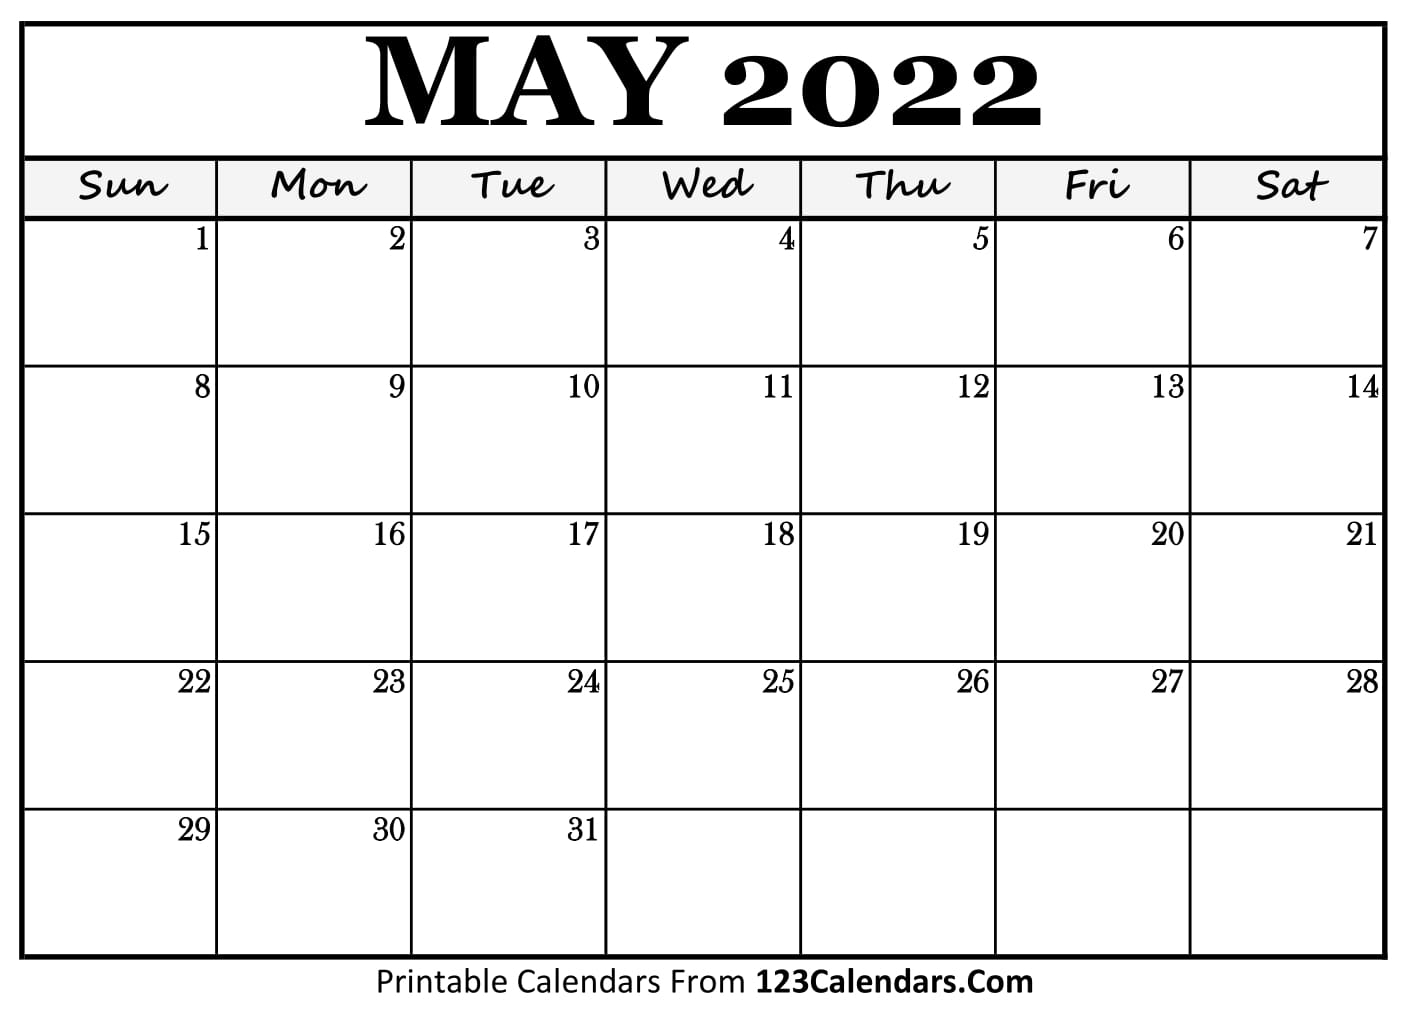 May 2022 Blank Calendar Printable May 2022 Calendar Templates - 123Calendars.com